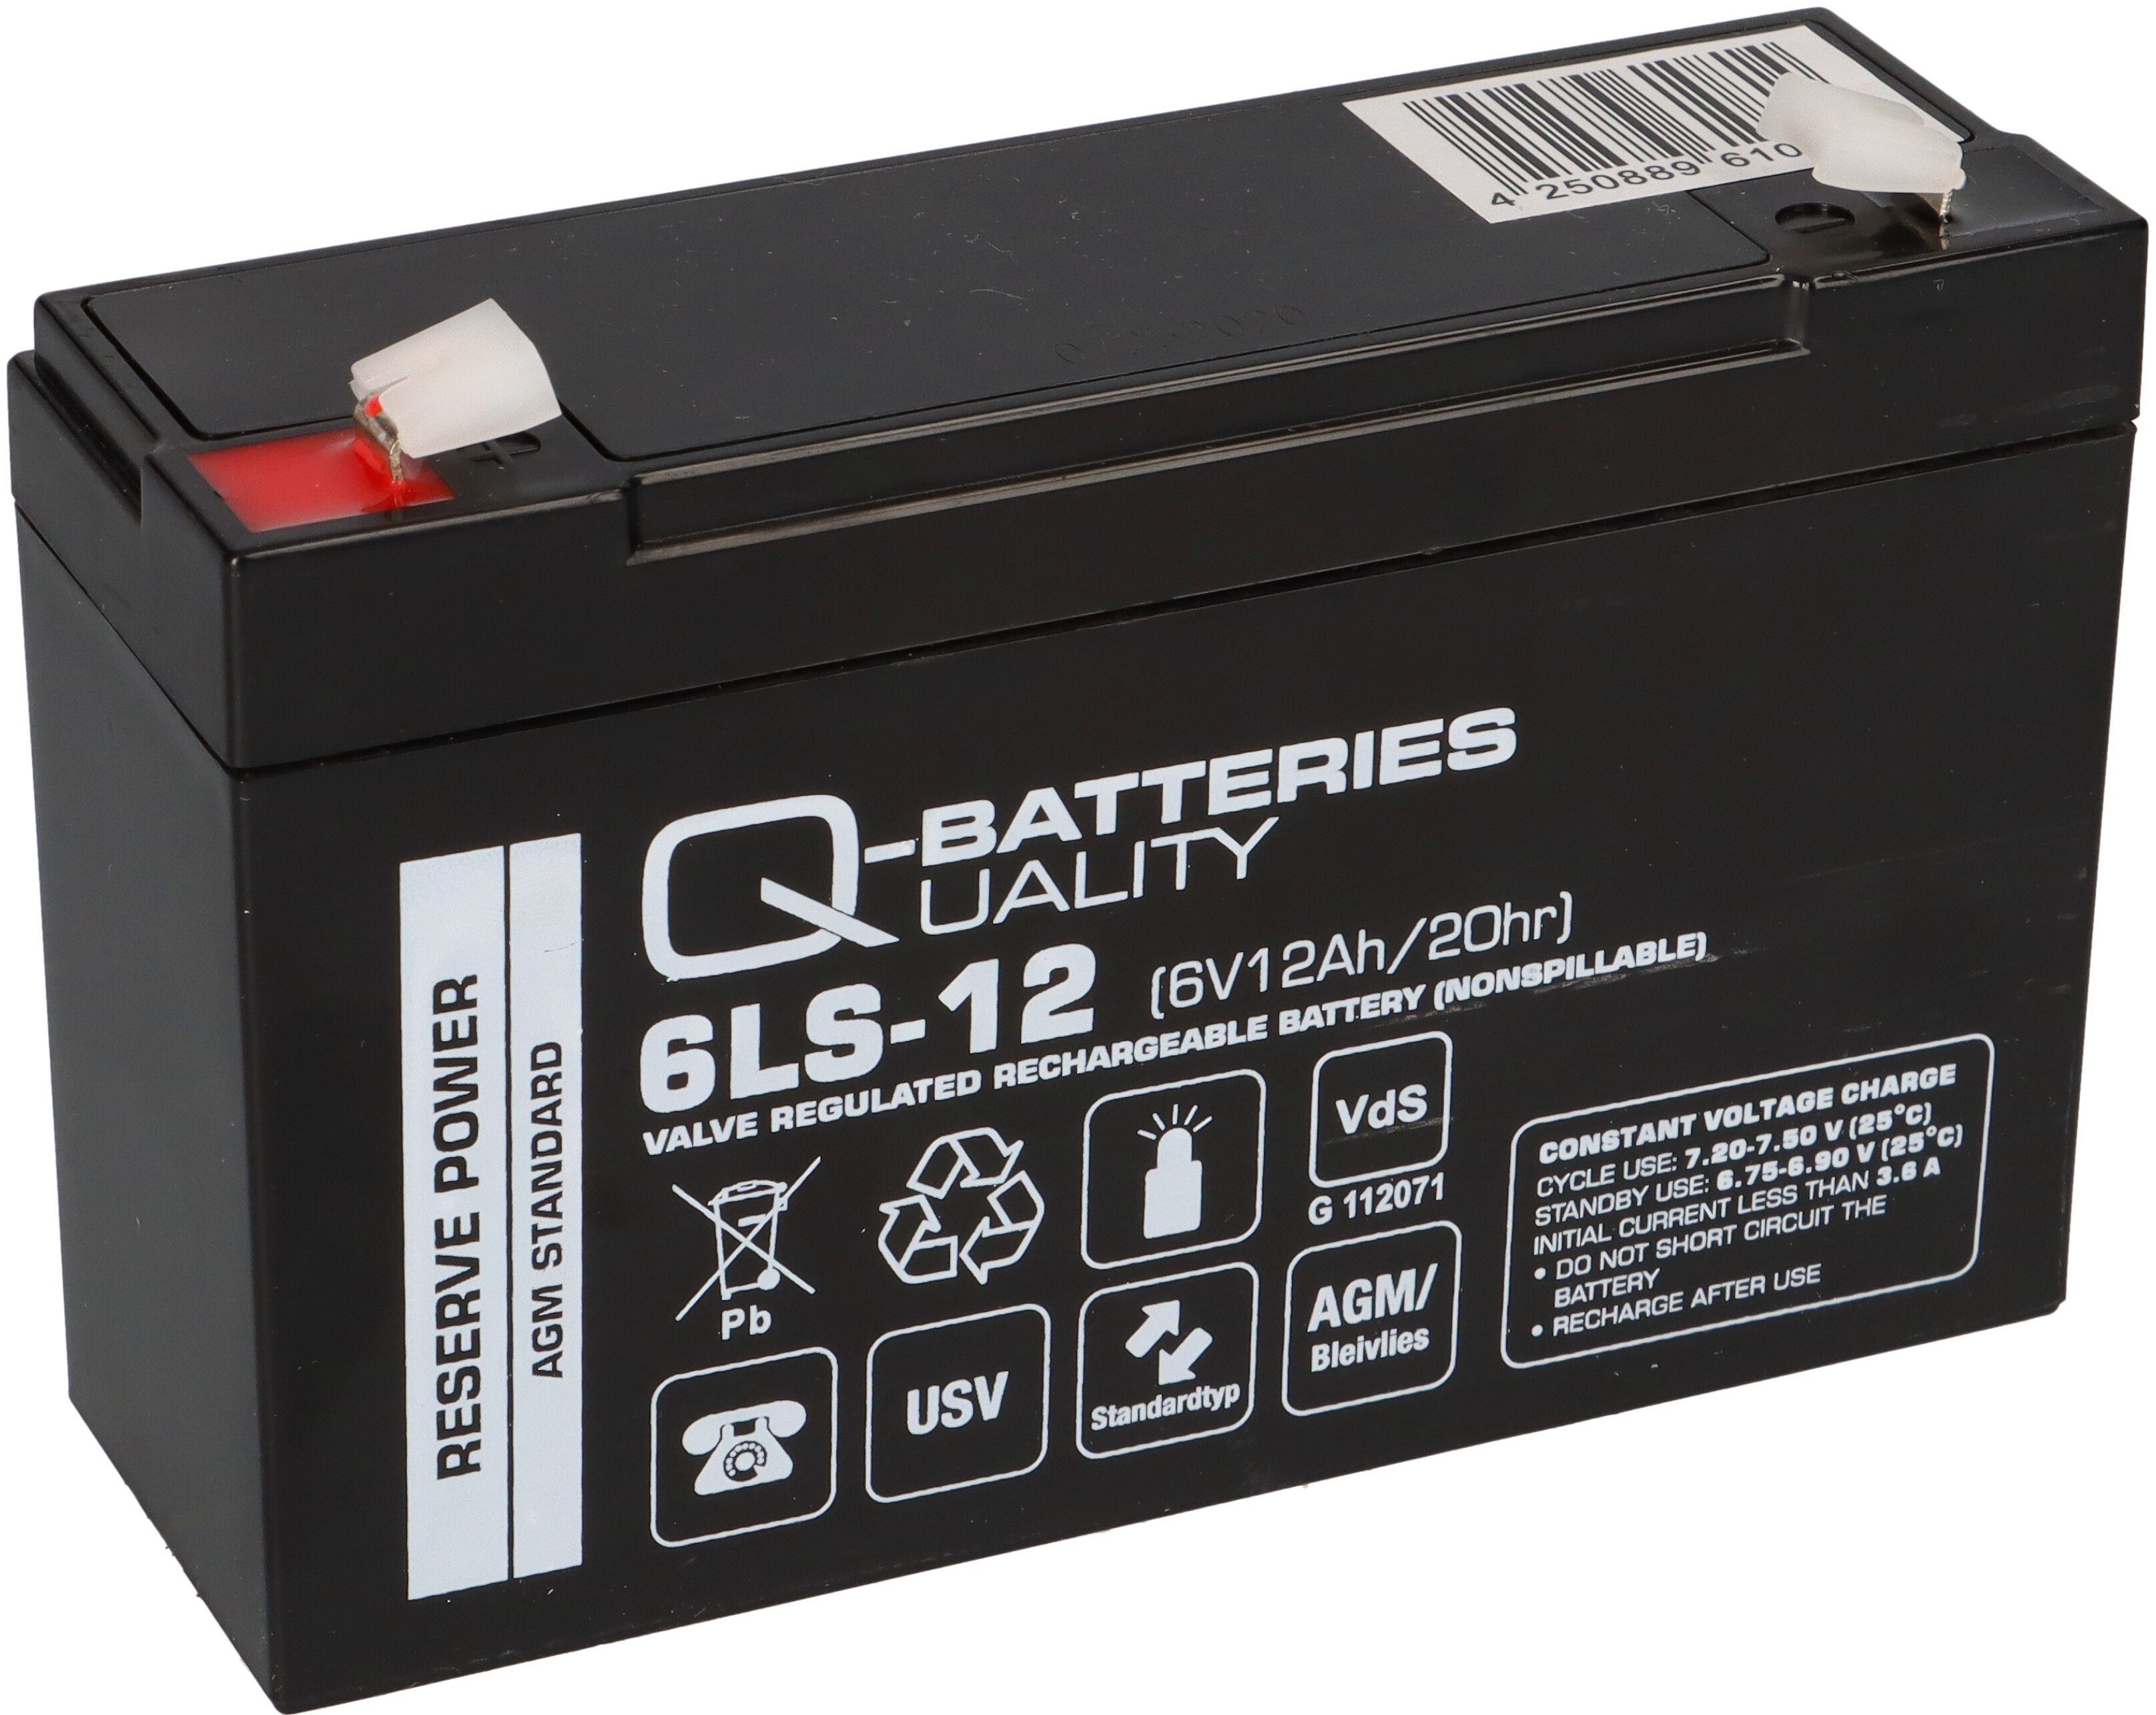 Q-Batteries Q-Batteries 6LS-12 Blei-Vlies / 12Ah mit Akku AGM Bleiakkus VRLA 6V VdS